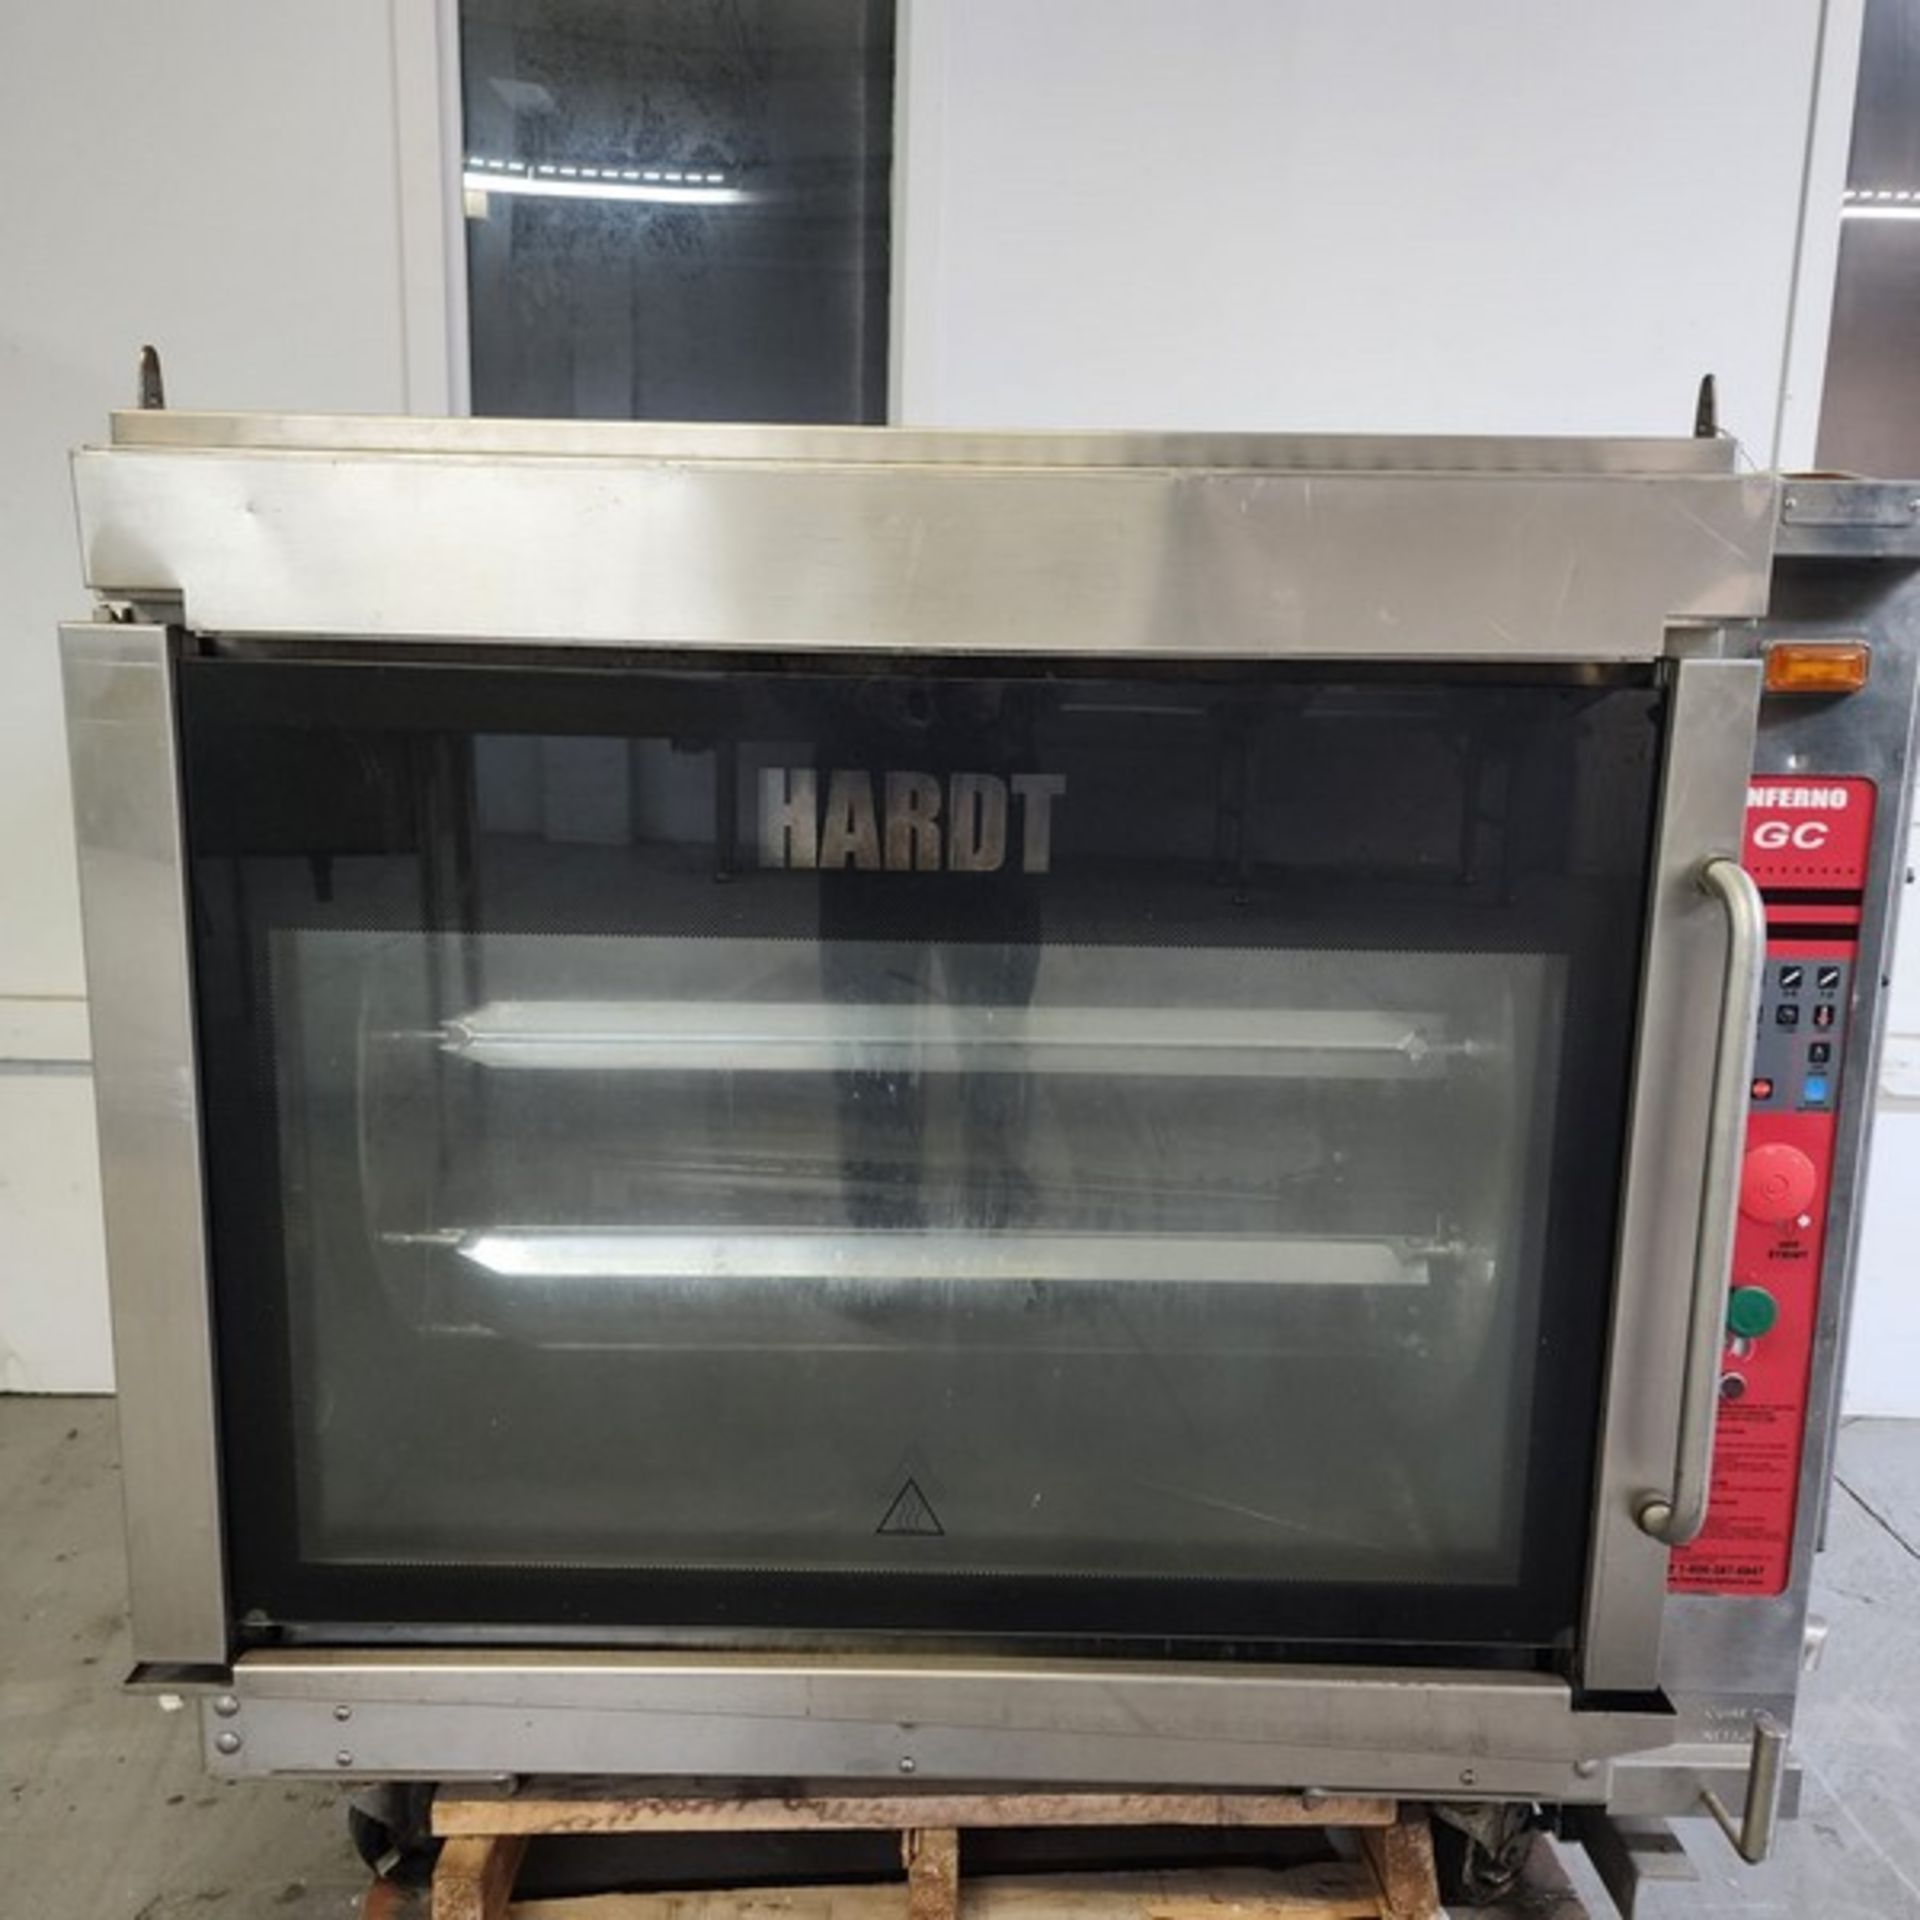 Hardt Oven Model Inferno-3500Gaz. Chicken Roaster. Serial Number 12073k. 120 volts, 60 hz, 1ph, 12 - Image 2 of 5